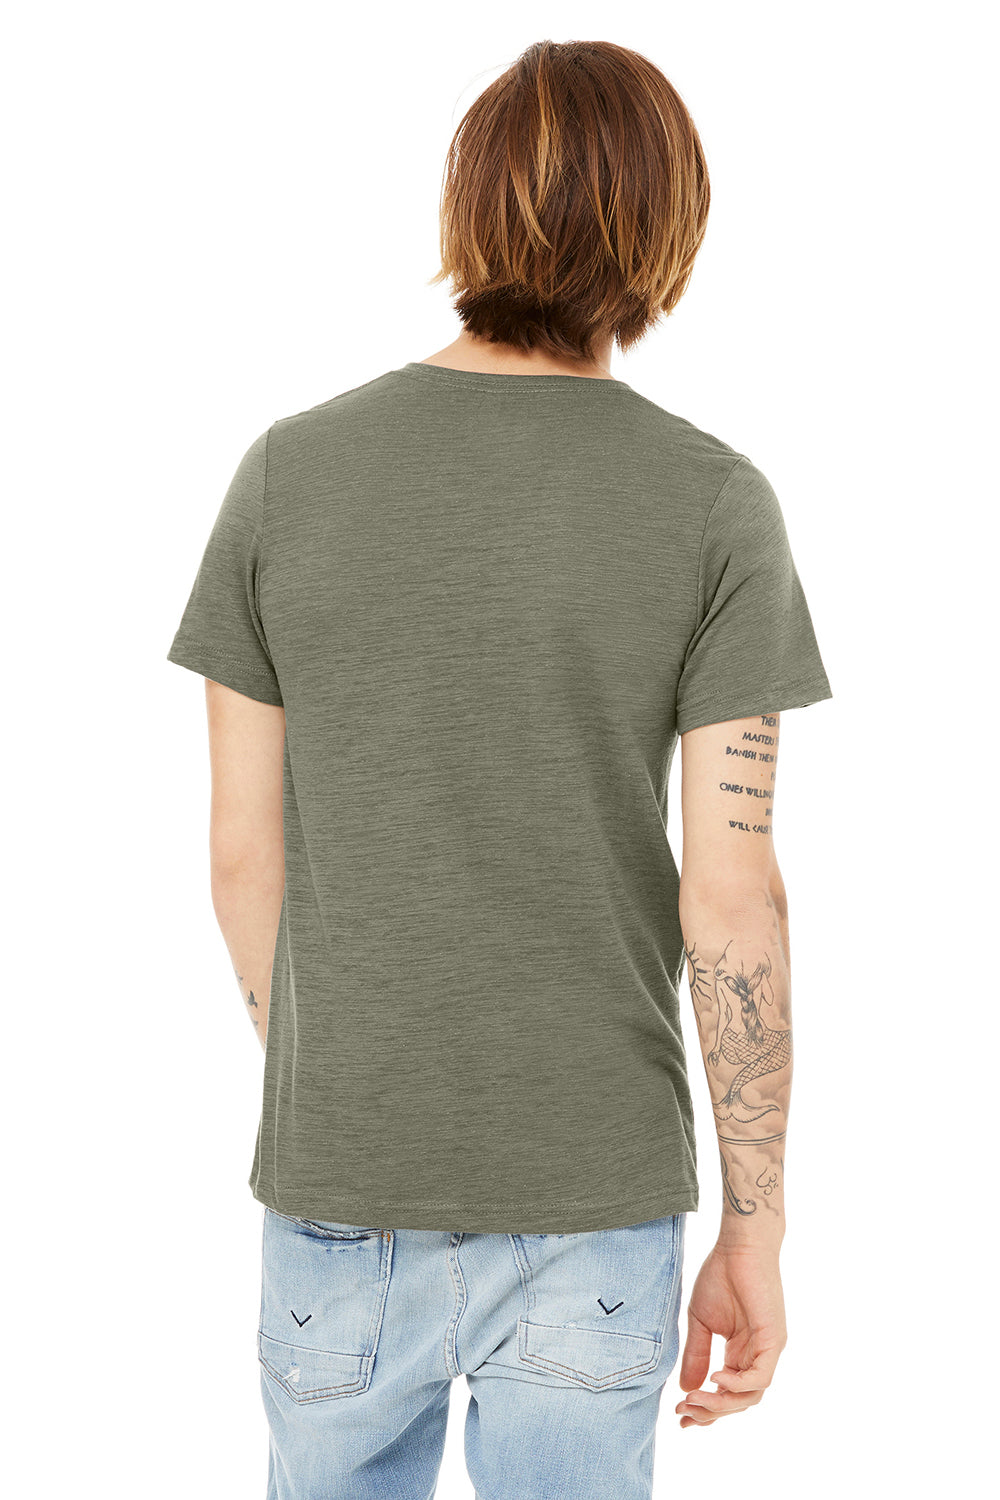 Bella + Canvas BC3005/3005/3655C Mens Jersey Short Sleeve V-Neck T-Shirt Olive Green Slub Model Back